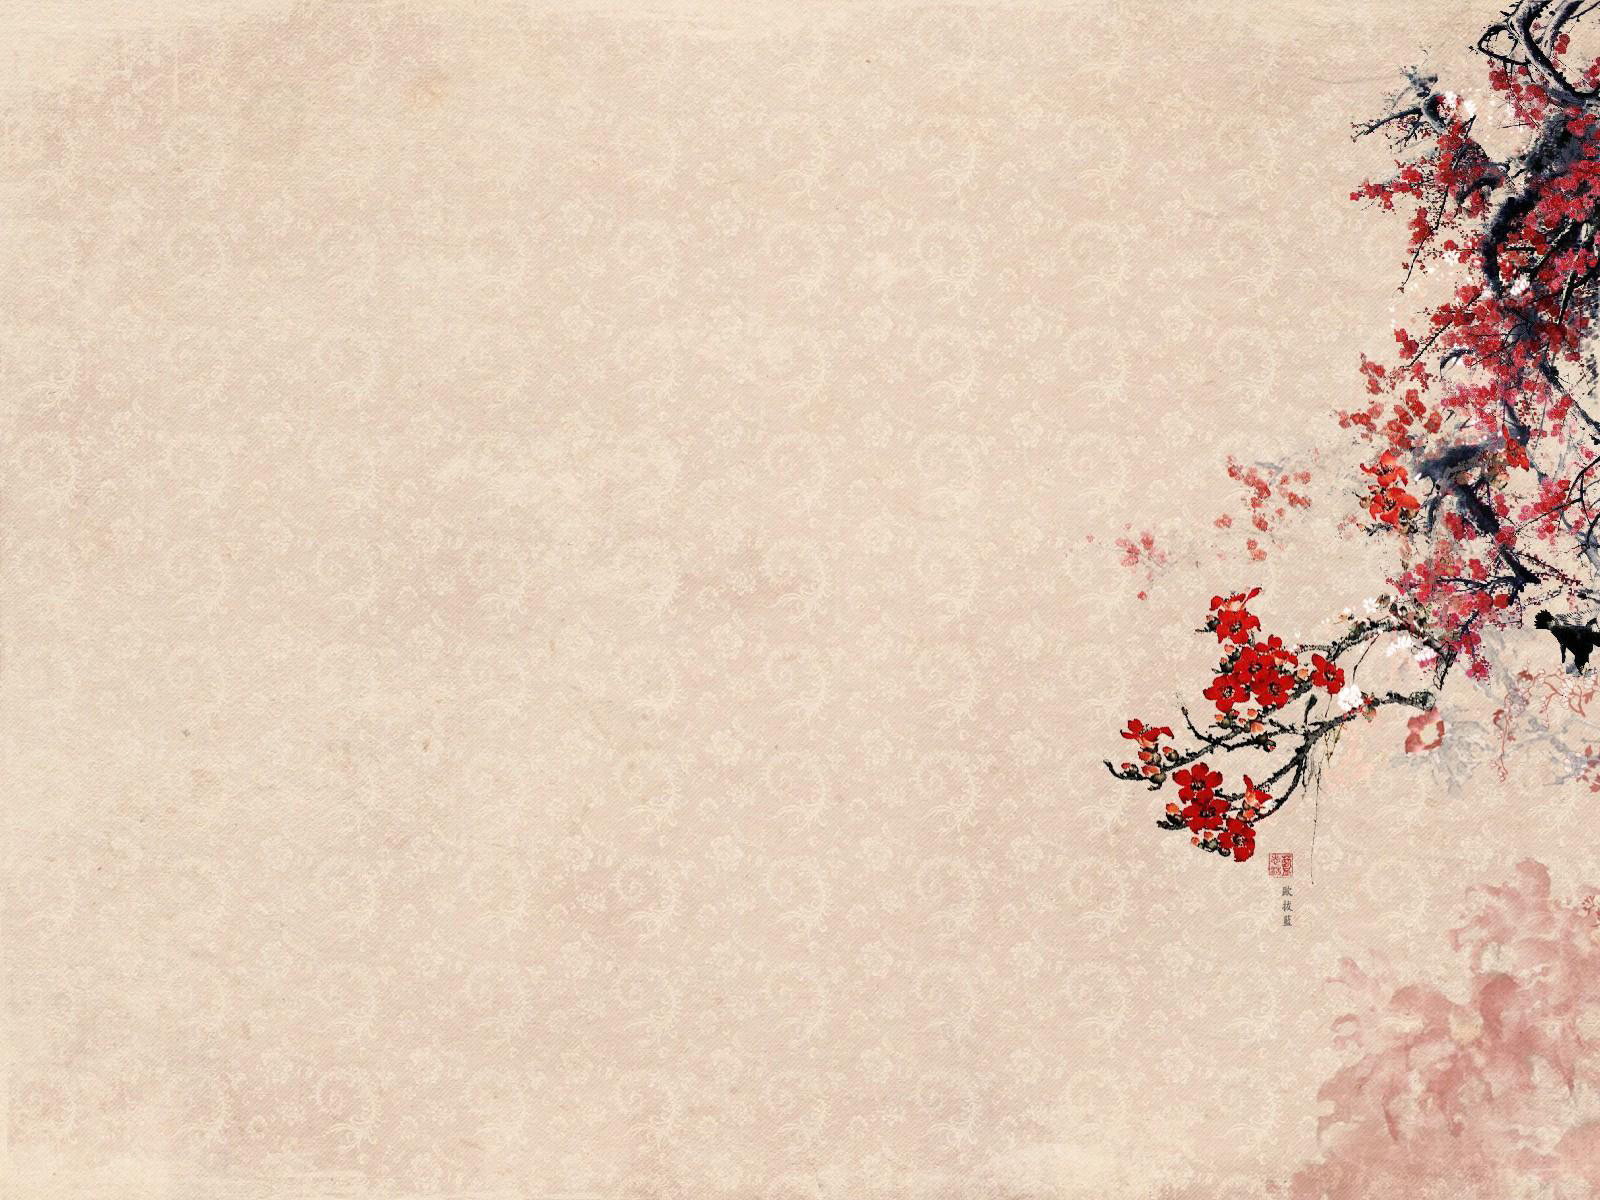 Kabekami Net 壁紙 イラスト 随時更新 和風な桜のイラスト Naver まとめ